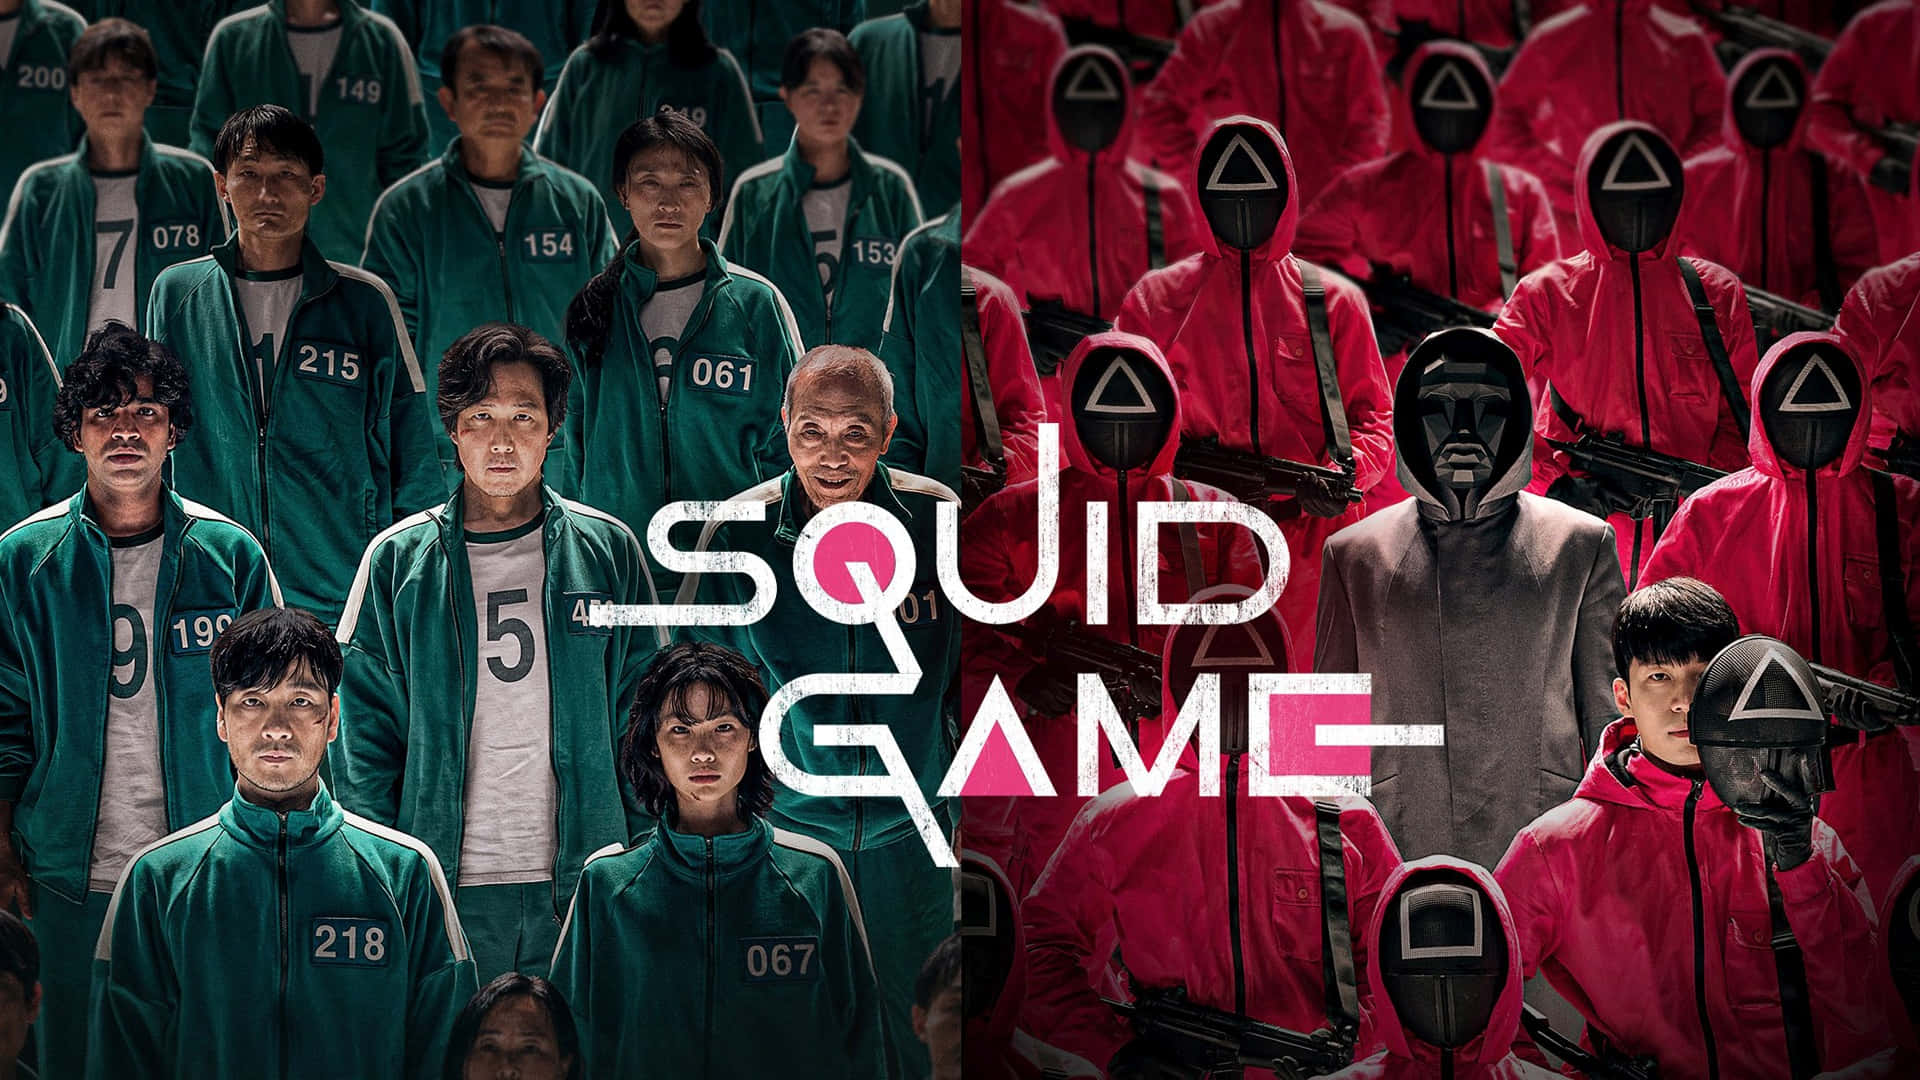 Desafiese: Jogue Squid Game